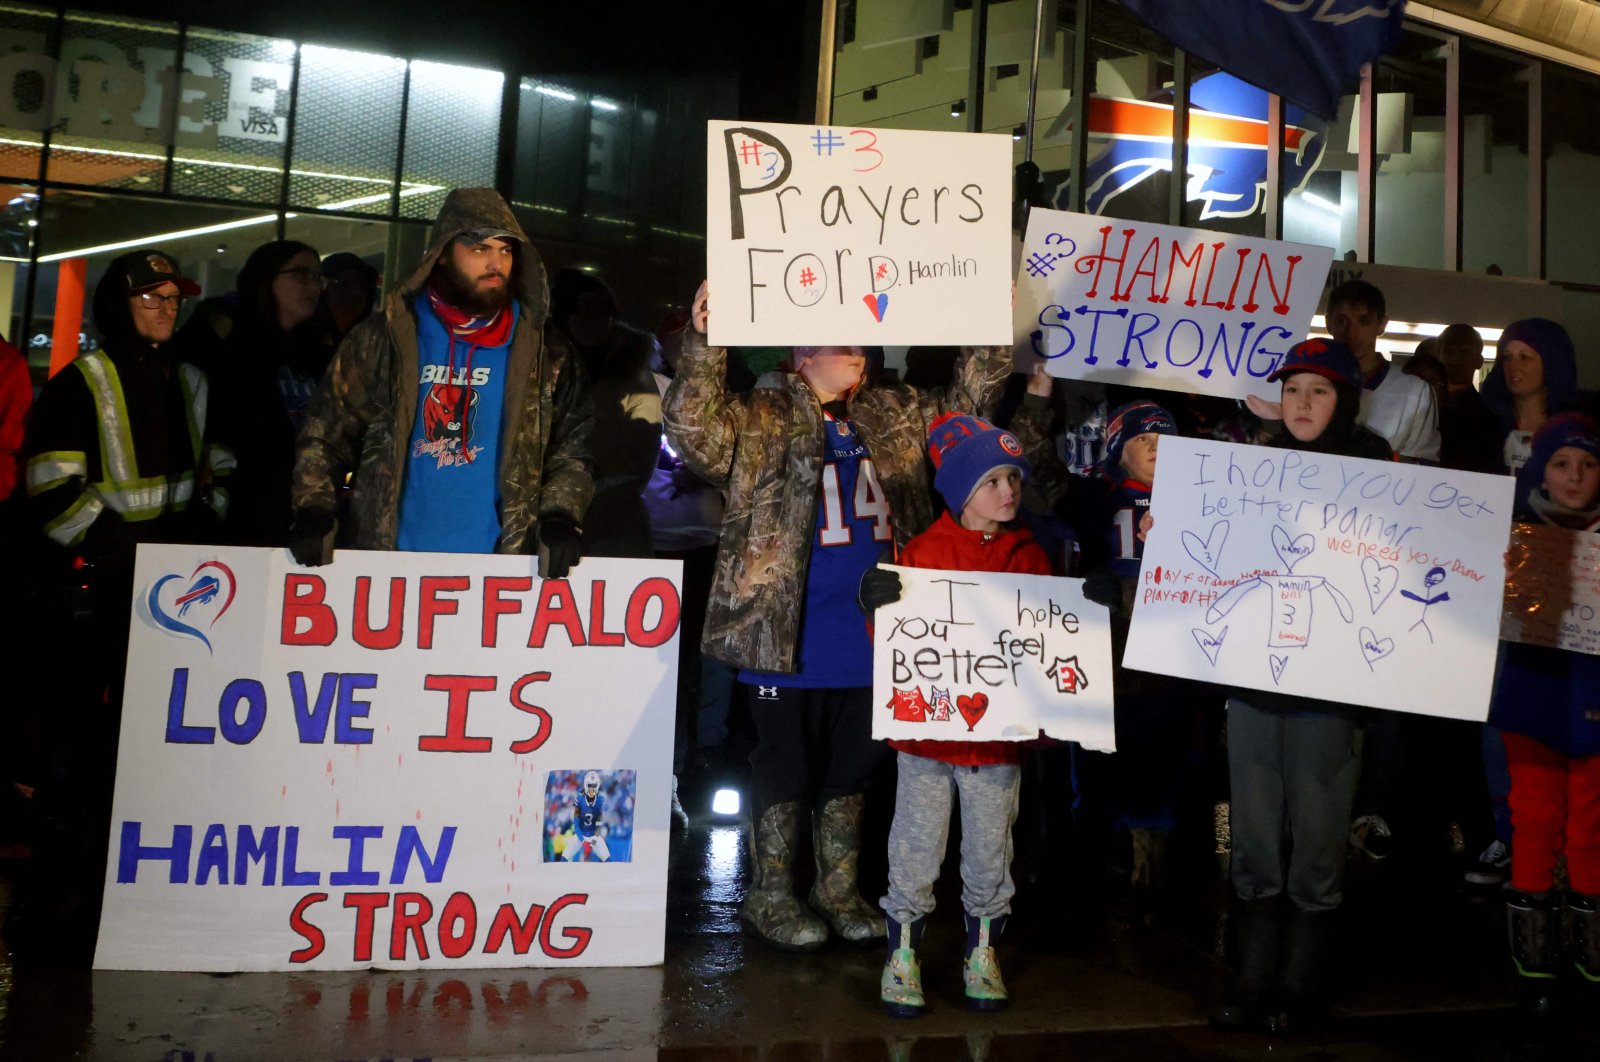 Buffalo Bills fans attend a candlelight prayer vigil for player Damar Hamlin at Highmark Stadium, Orchard Park, New York, US., Jan. 3, 2023. (AFP Photo)